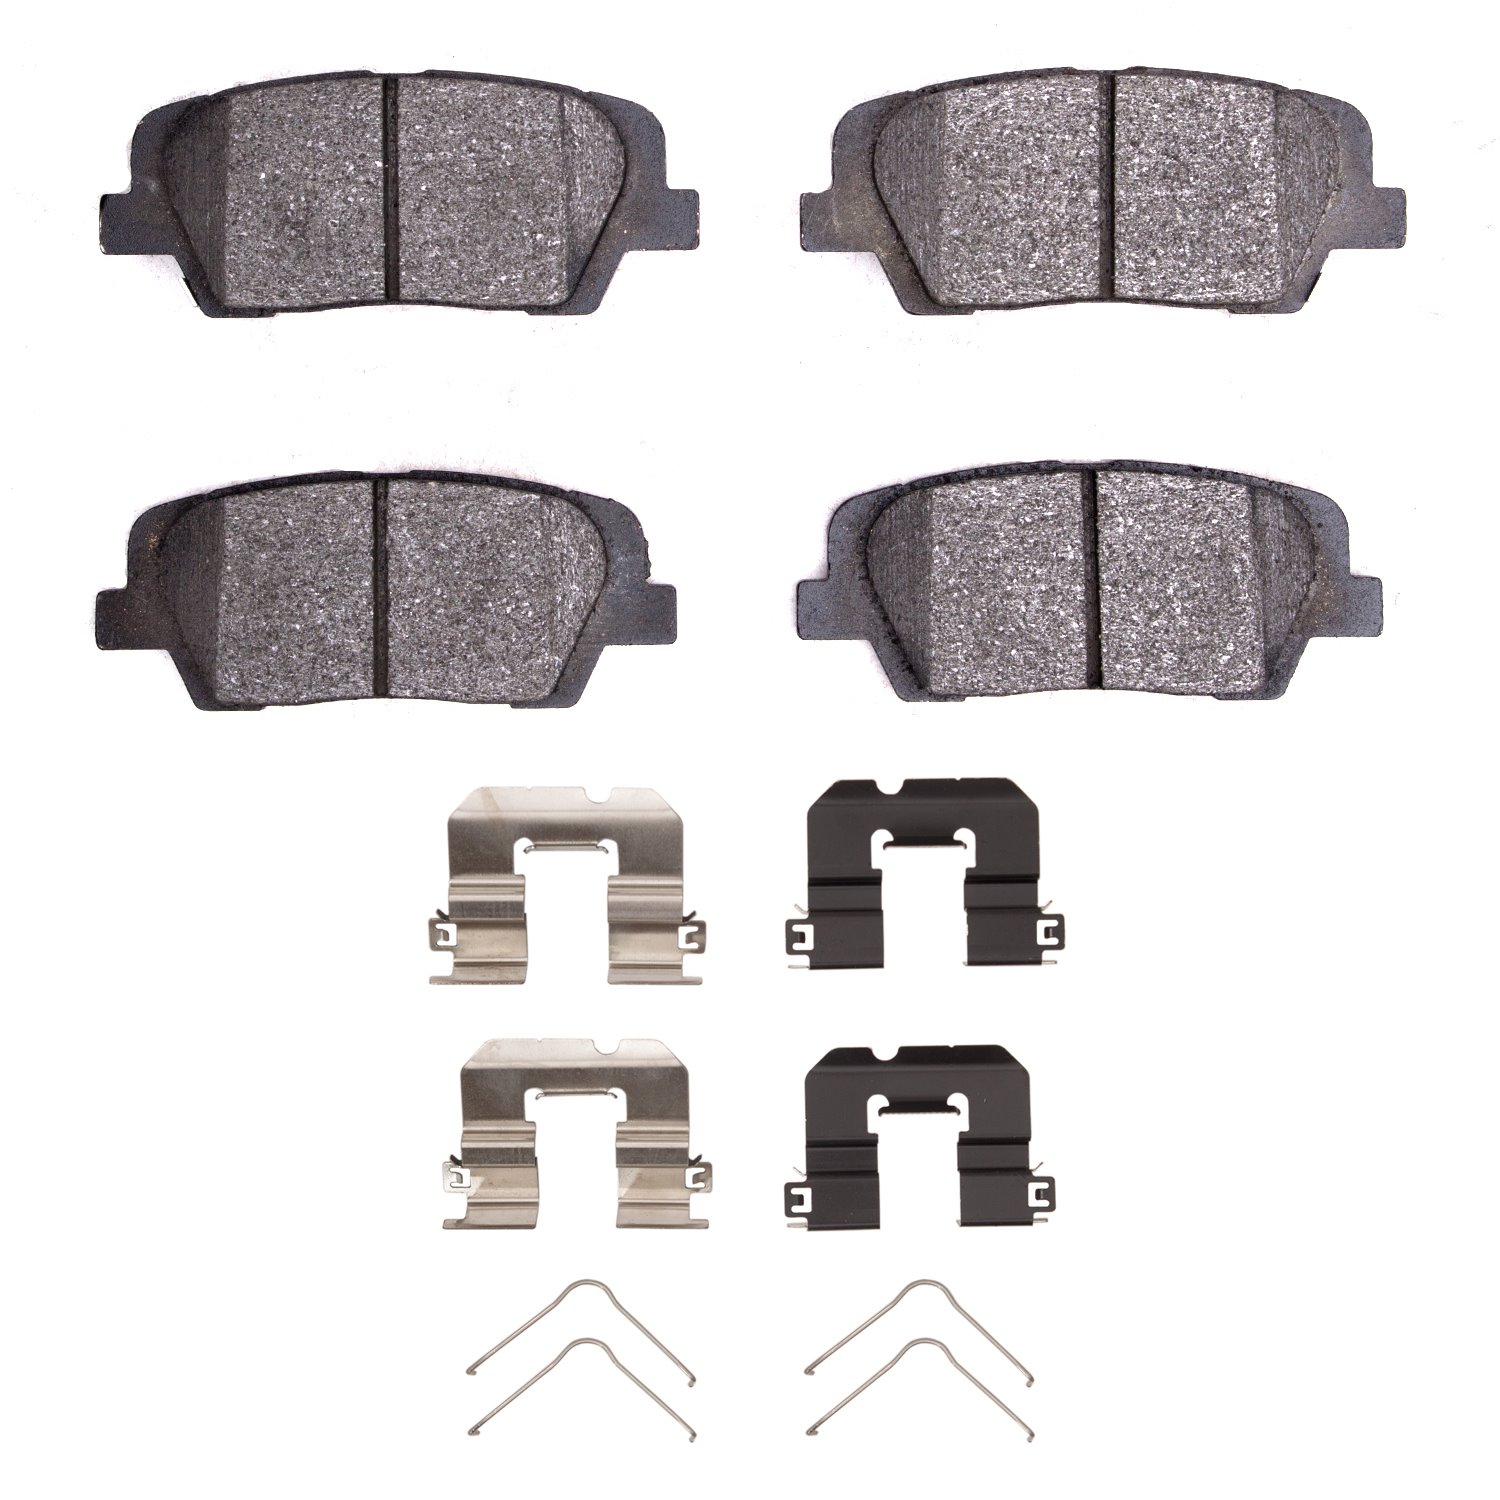 1310-1816-04 3000-Series Ceramic Brake Pads & Hardware Kit, Fits Select Kia/Hyundai/Genesis, Position: Rear